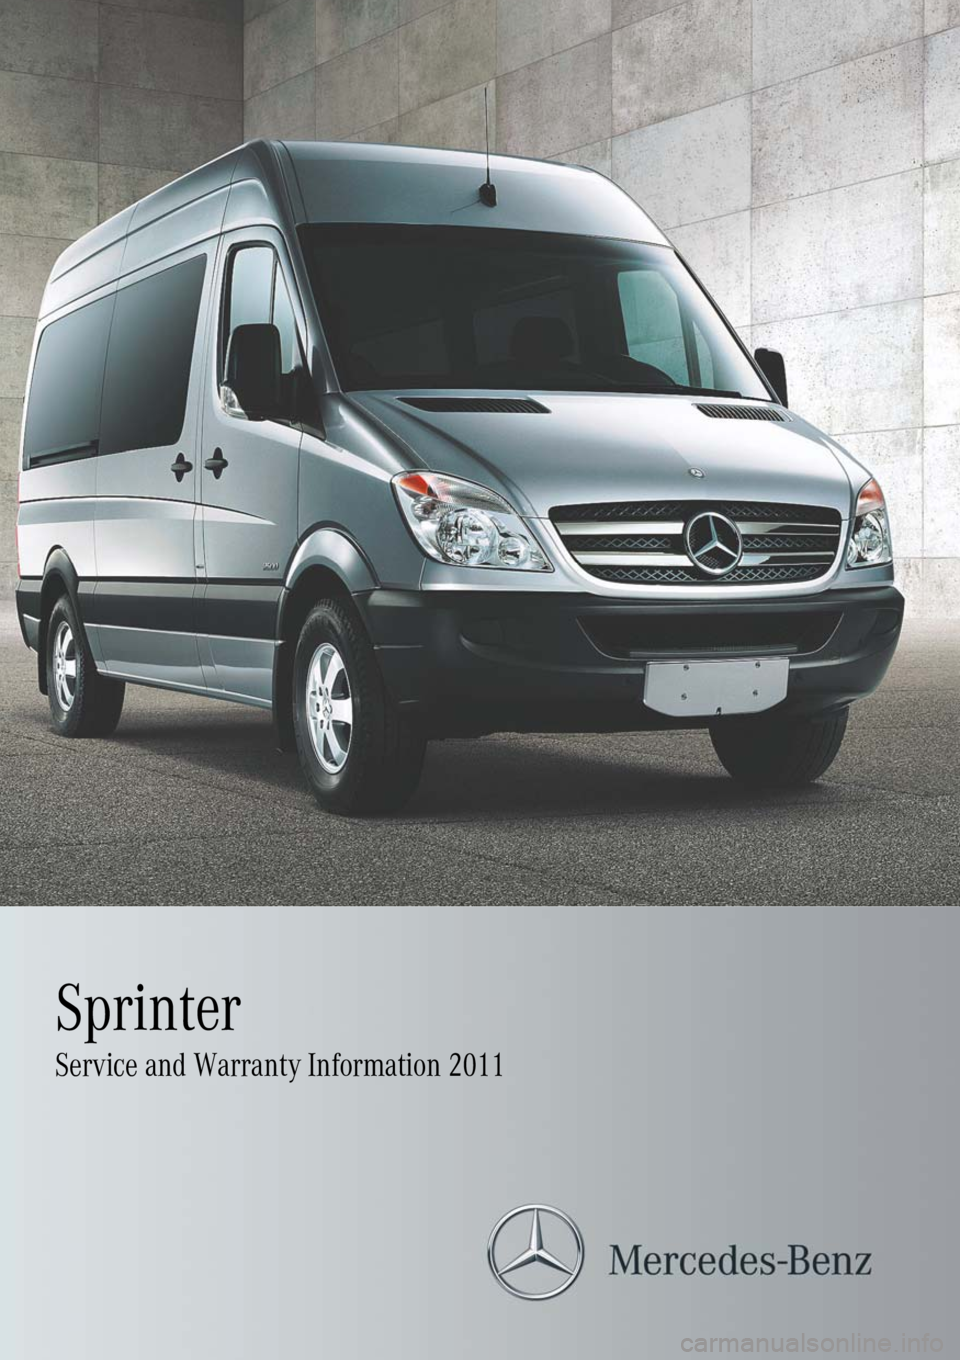 MERCEDES-BENZ SPRINTER 2011  MY11 Warranty Manual Sprinter
Service and Warranty Information 2011 